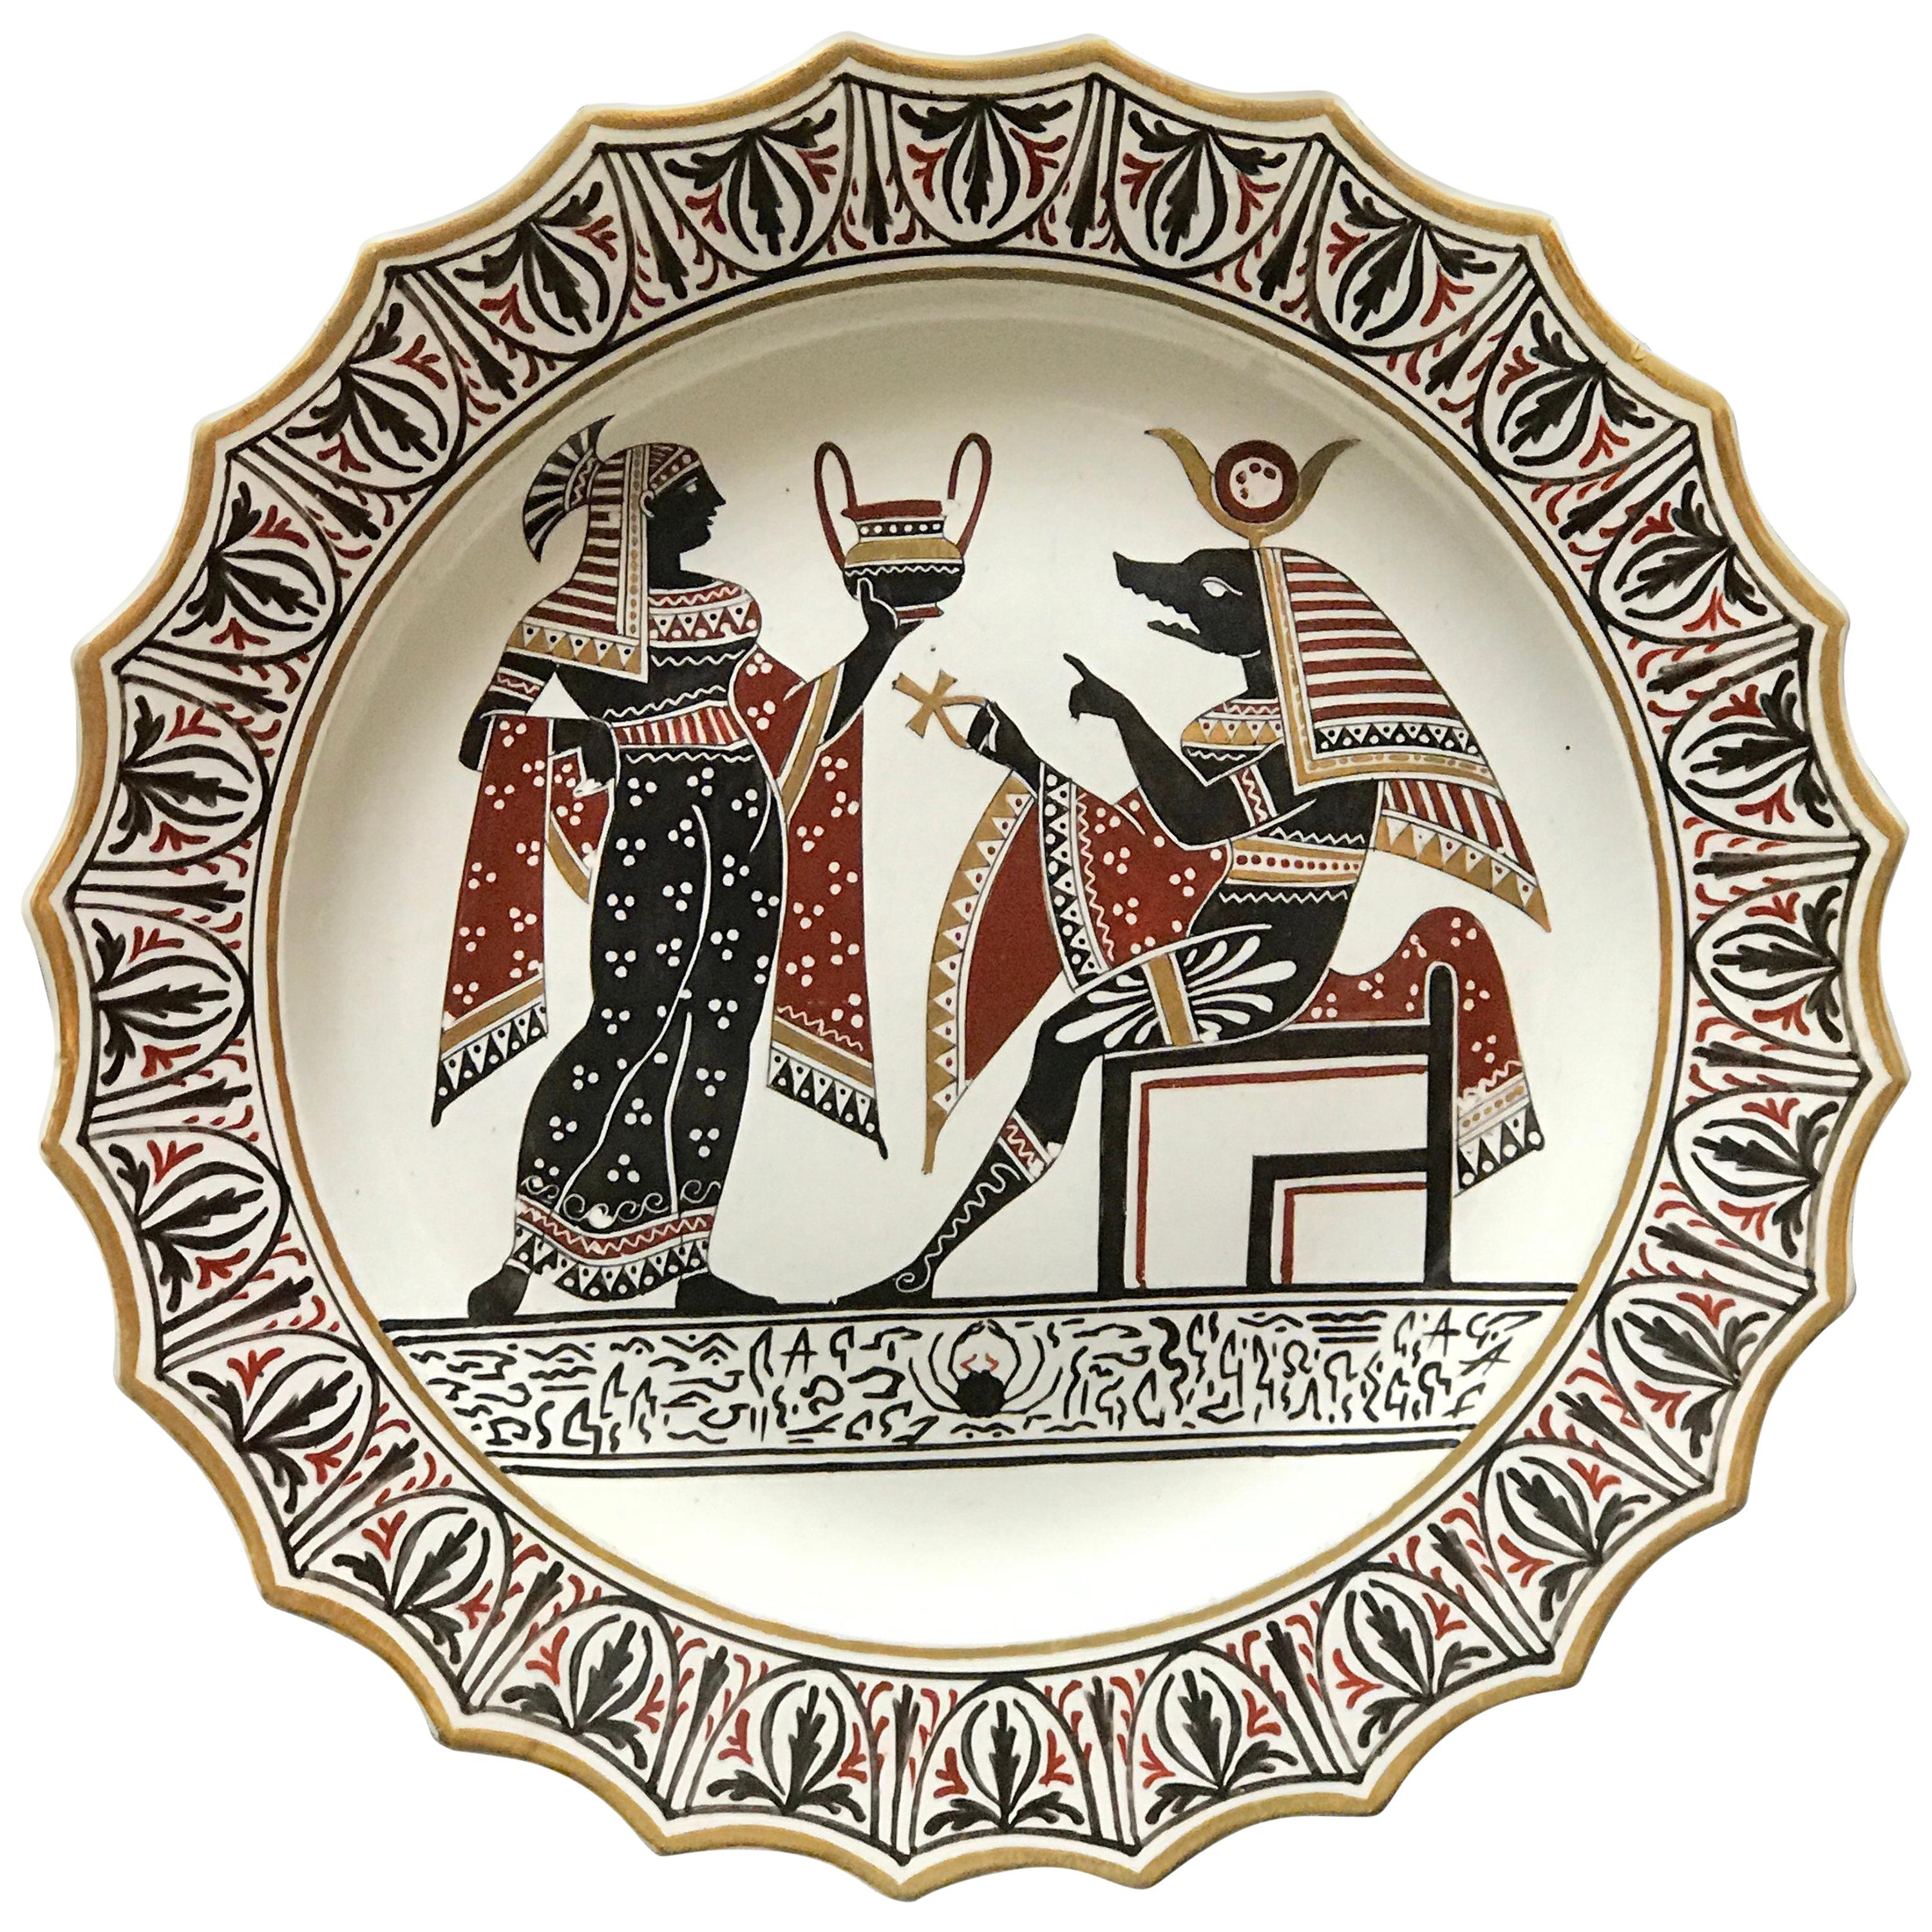 Giustiniani Egyptomania Pottery Plate with Anubis